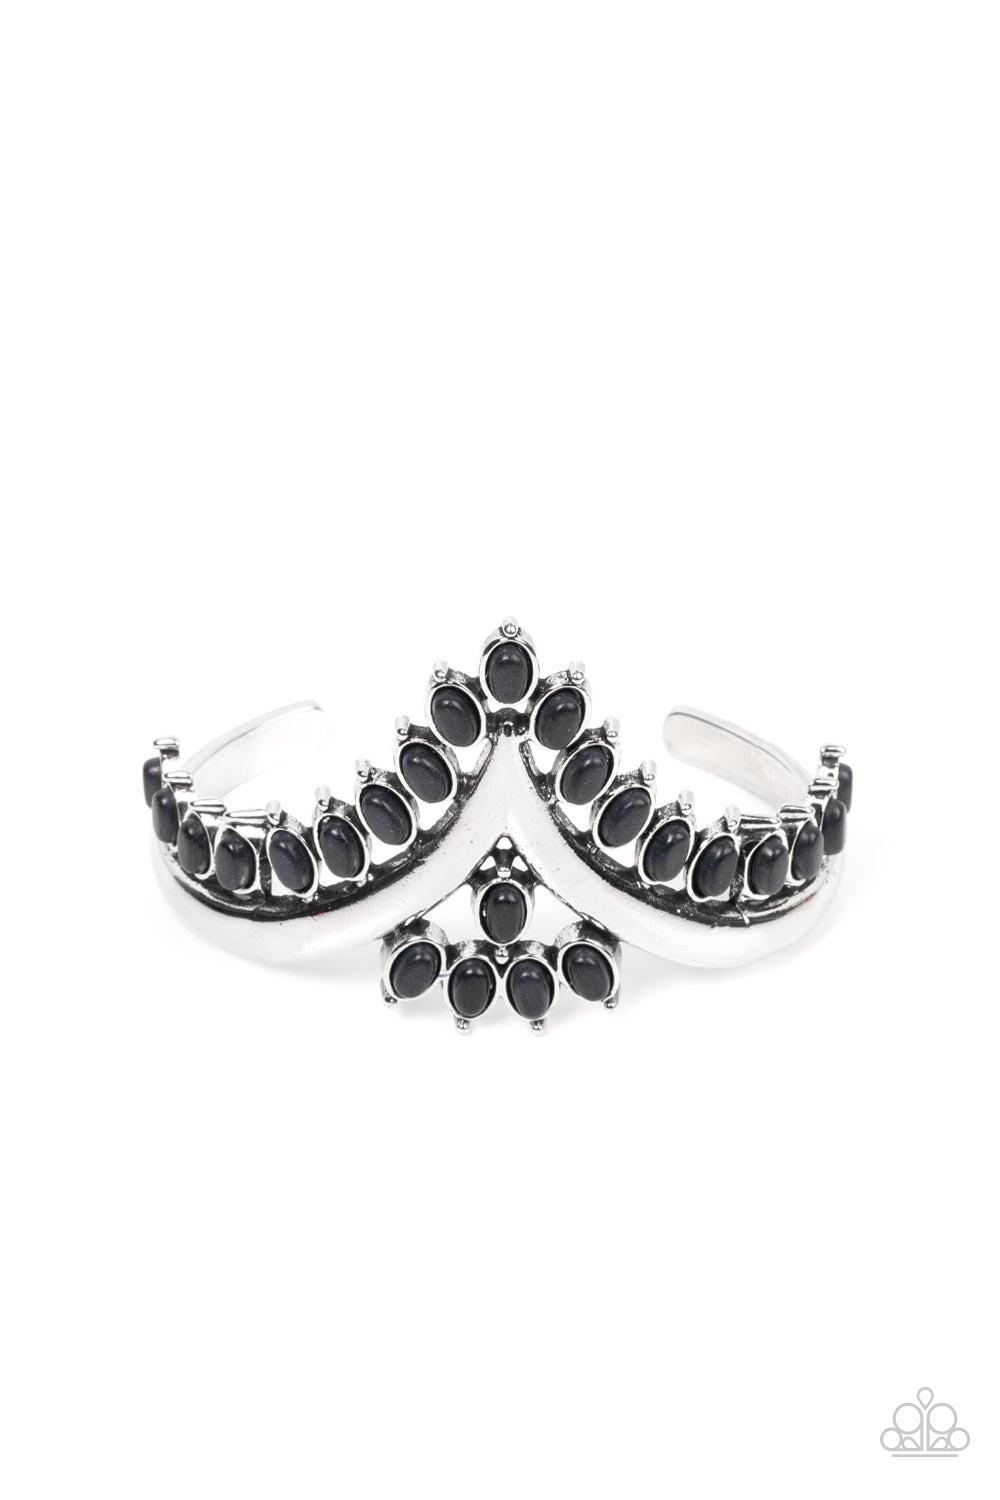 Teton Tiara Black Stone Cuff Bracelet - Paparazzi Accessories- lightbox - CarasShop.com - $5 Jewelry by Cara Jewels